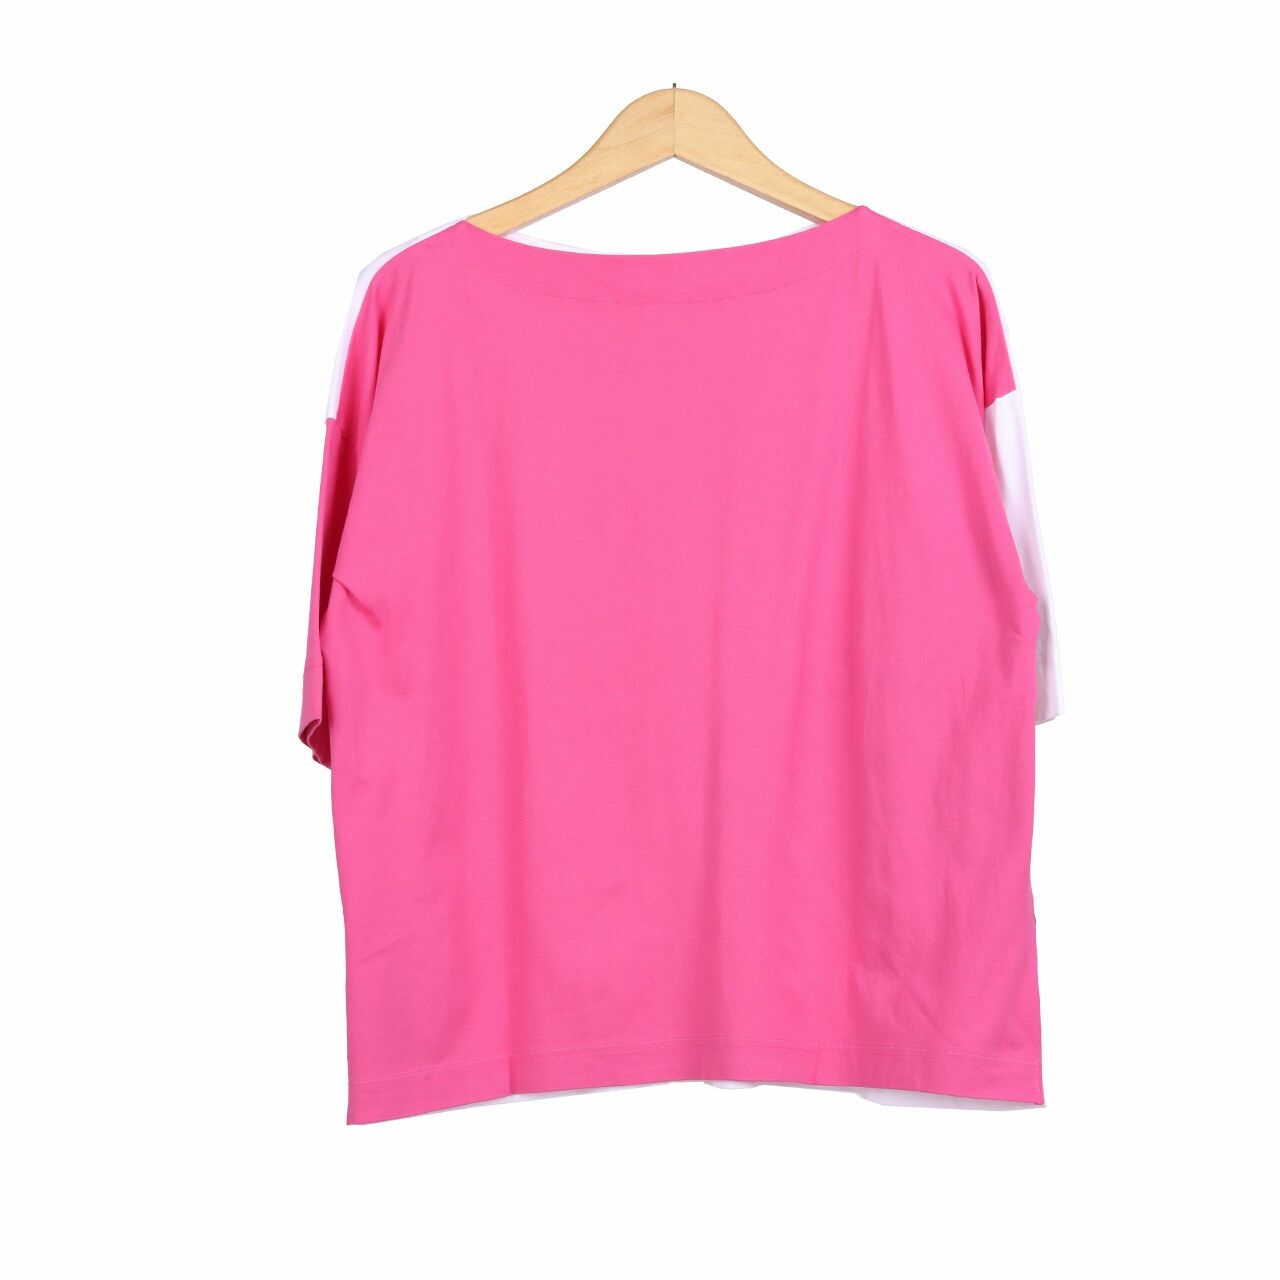 UNIQLO X MARNI  Pink & White T-Shirt